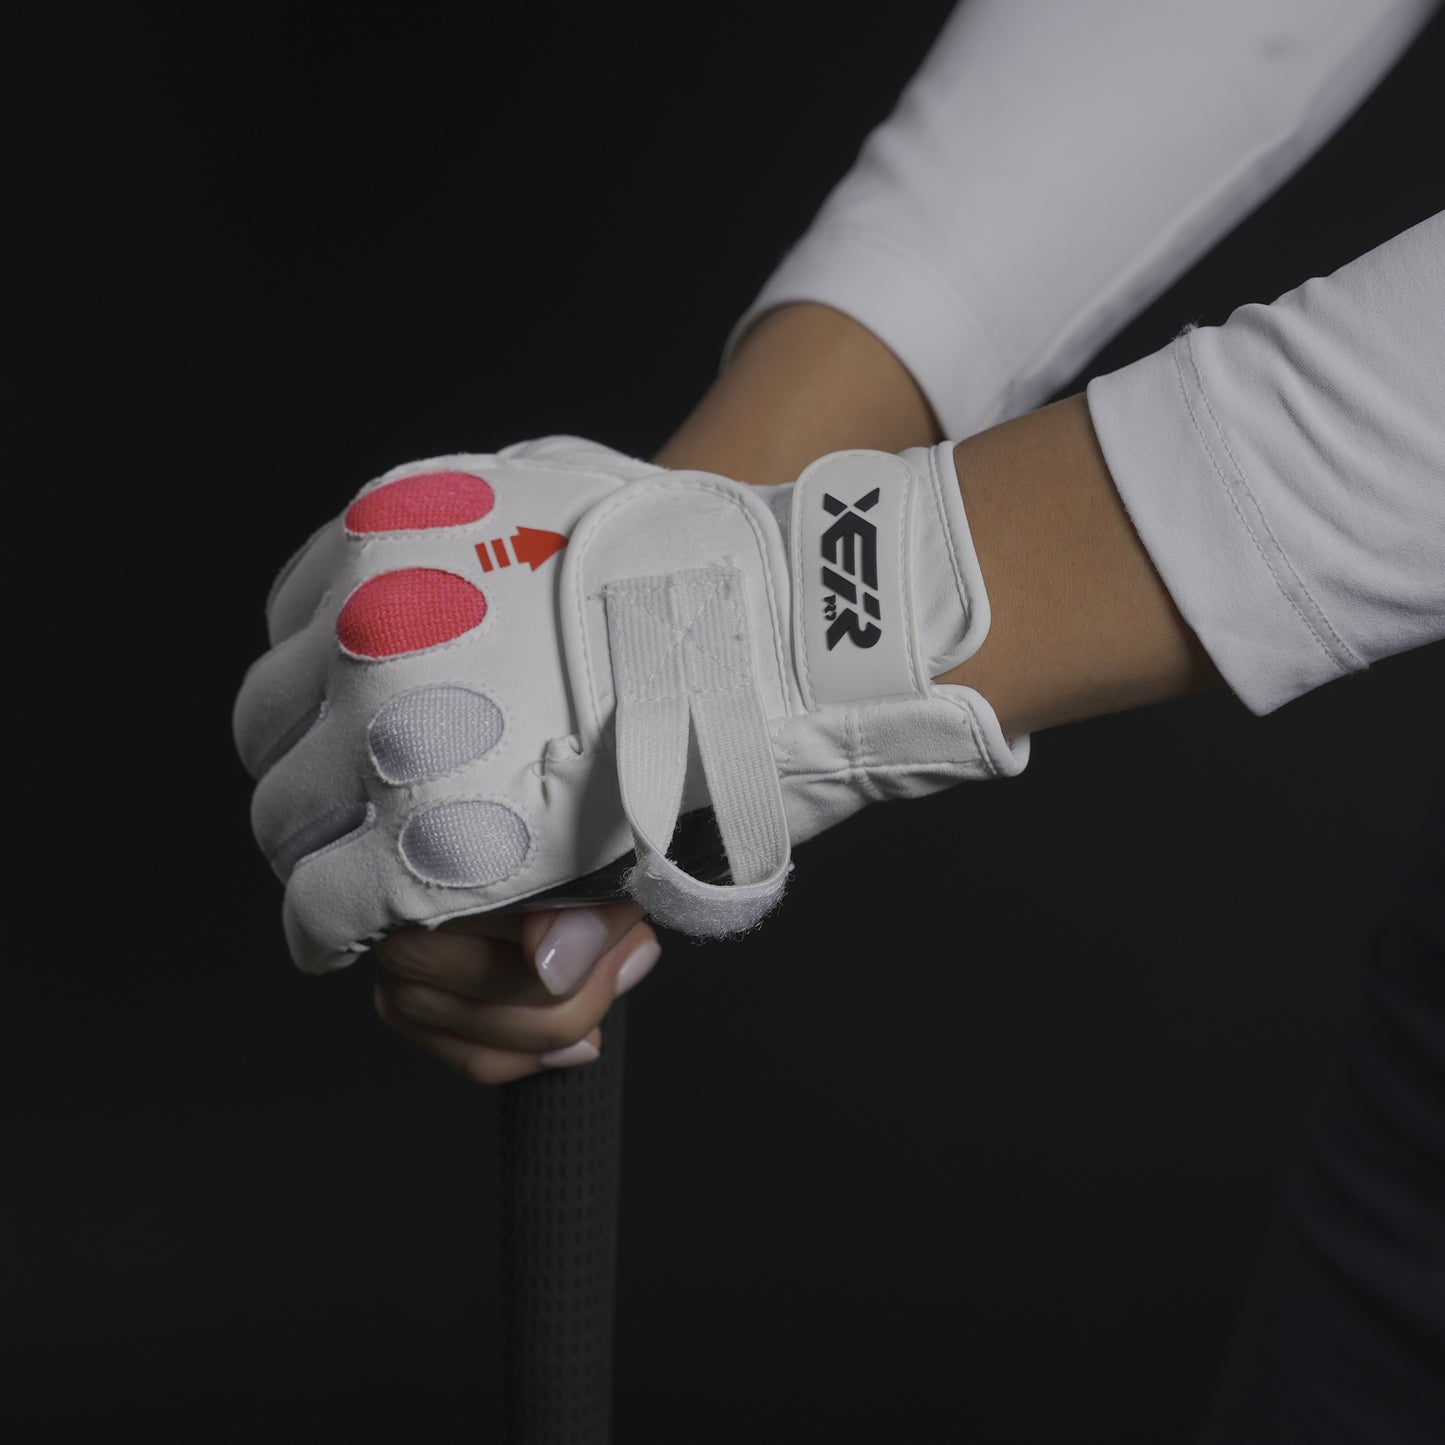 XEIR PRO Golf Grip Training Gloves